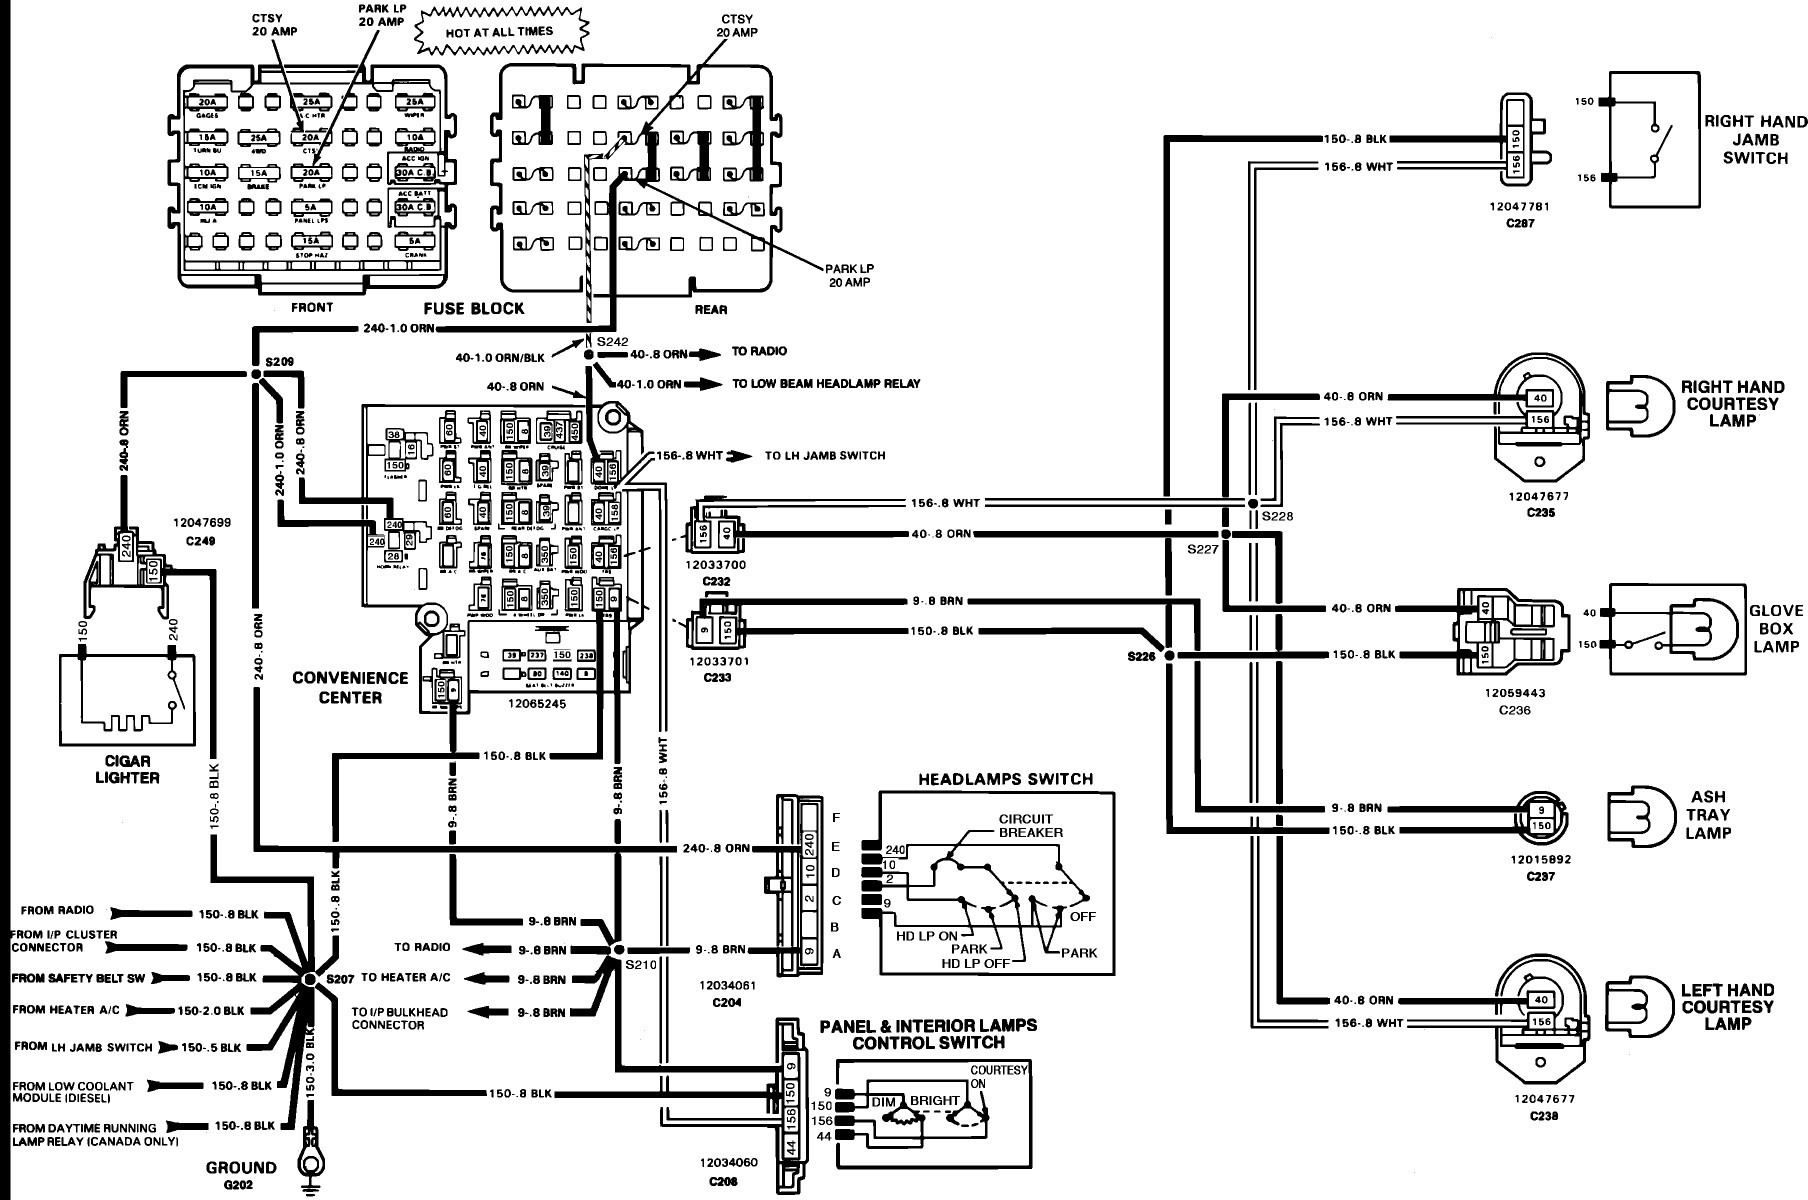 1995 Chevy Truck Parts Diagram Suburban Parts Diagram Besides Gm Bulkhead Connector Wiring Diagram